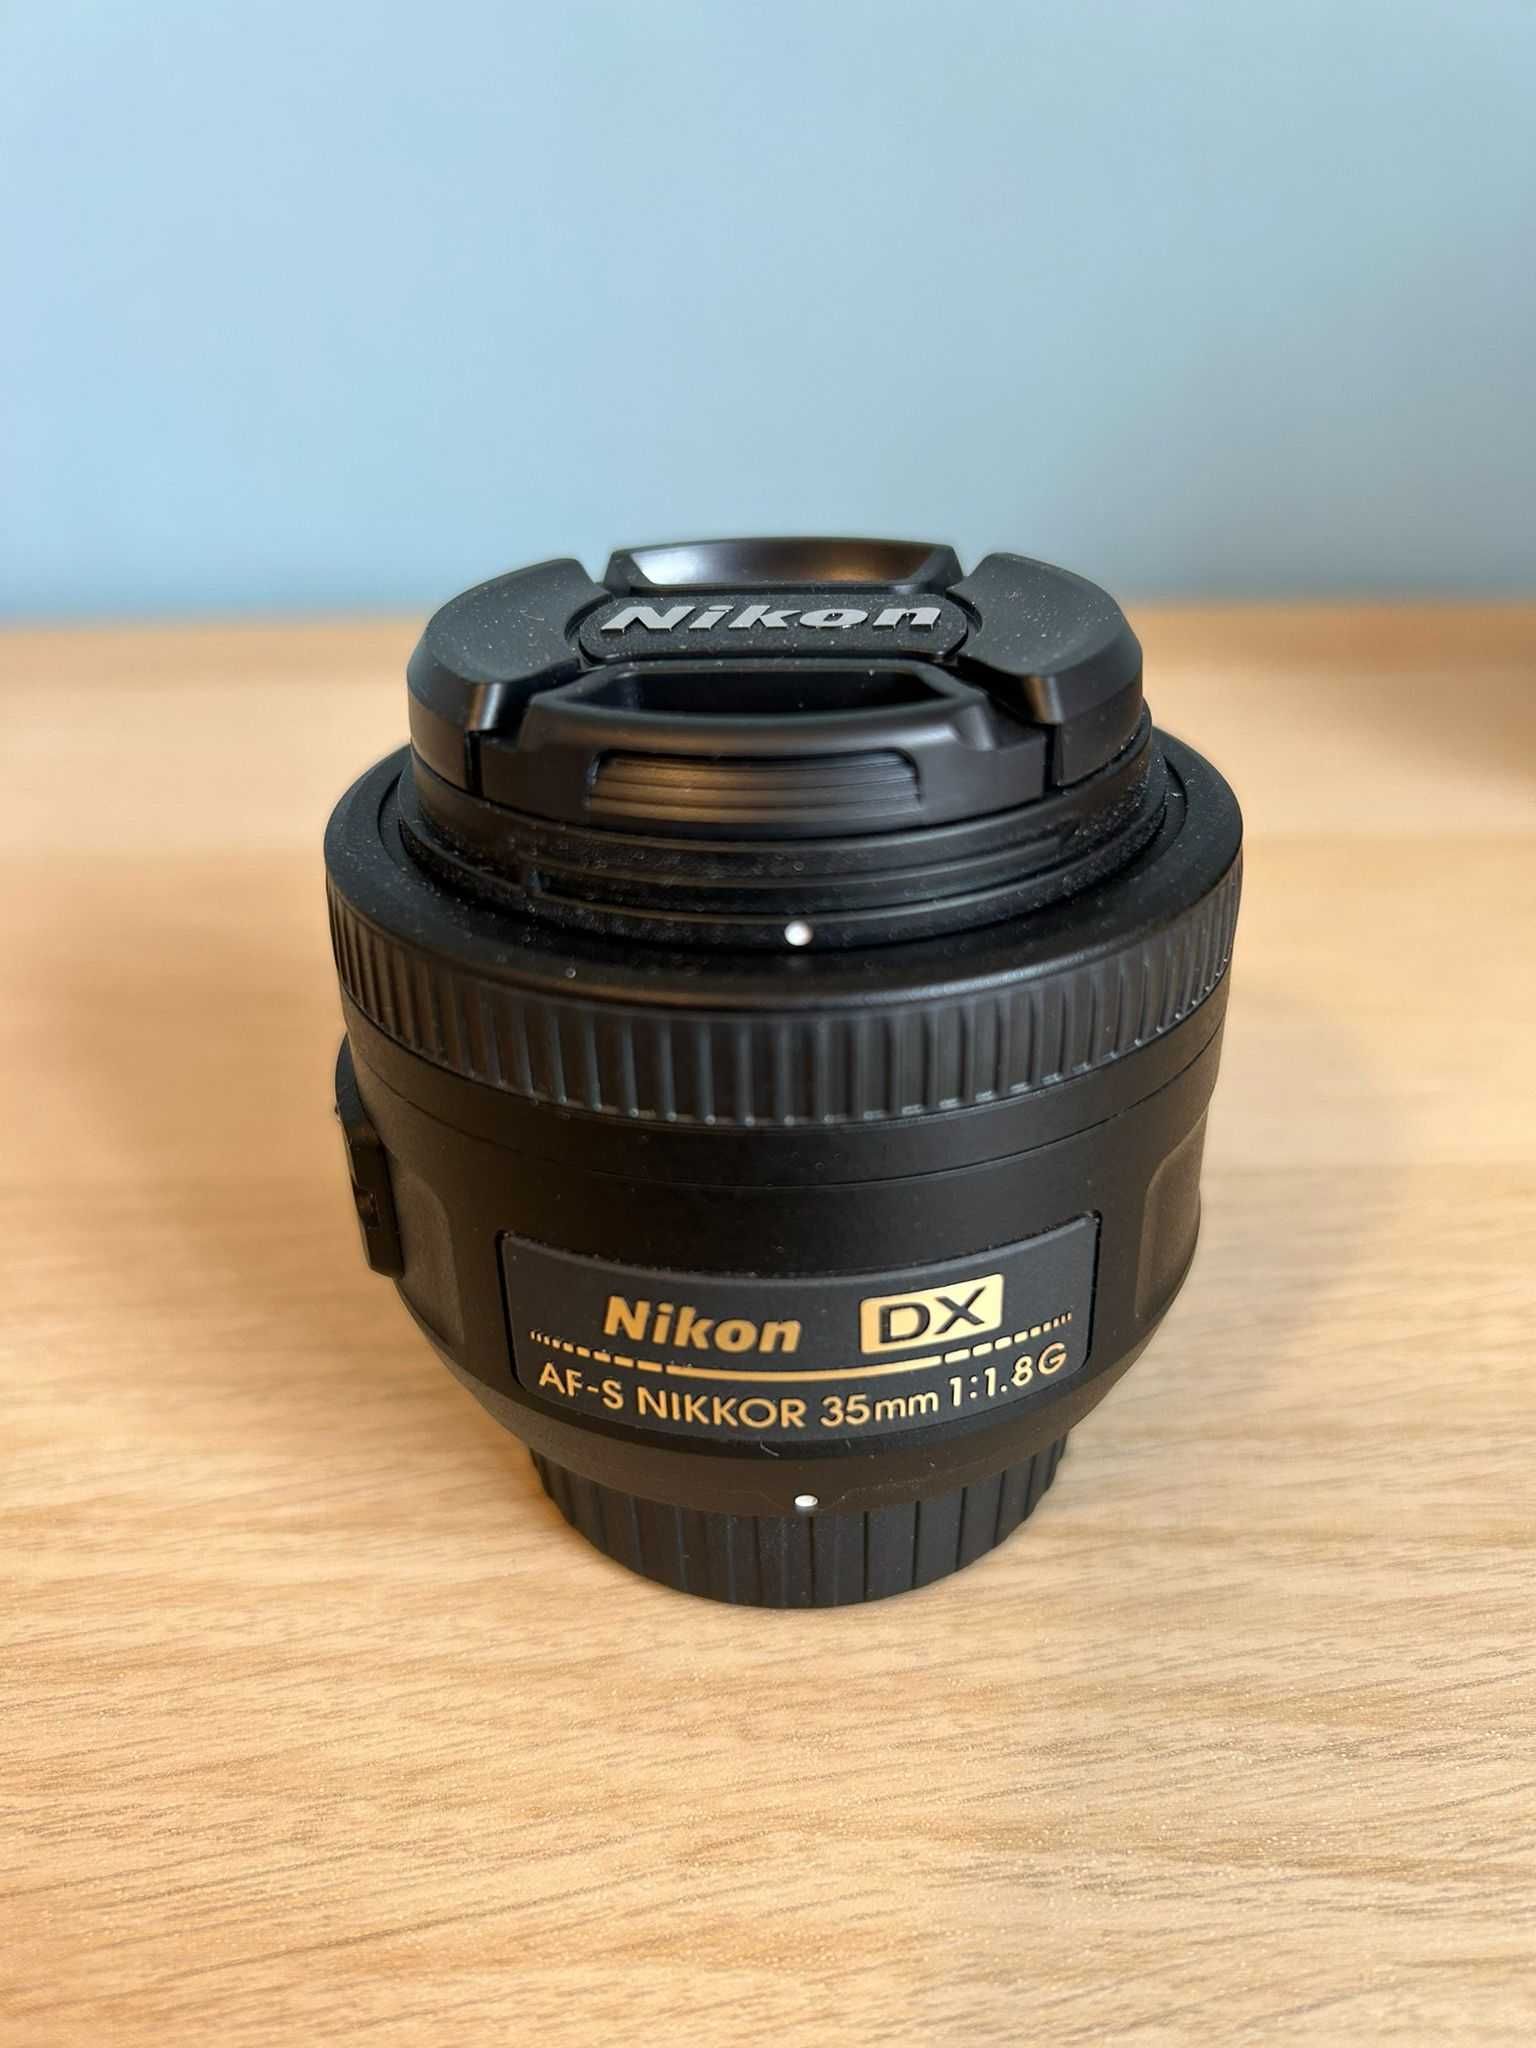 Kit DSLR Nikon D7100 (9k cadre), 2 obiective, blit si accesorii